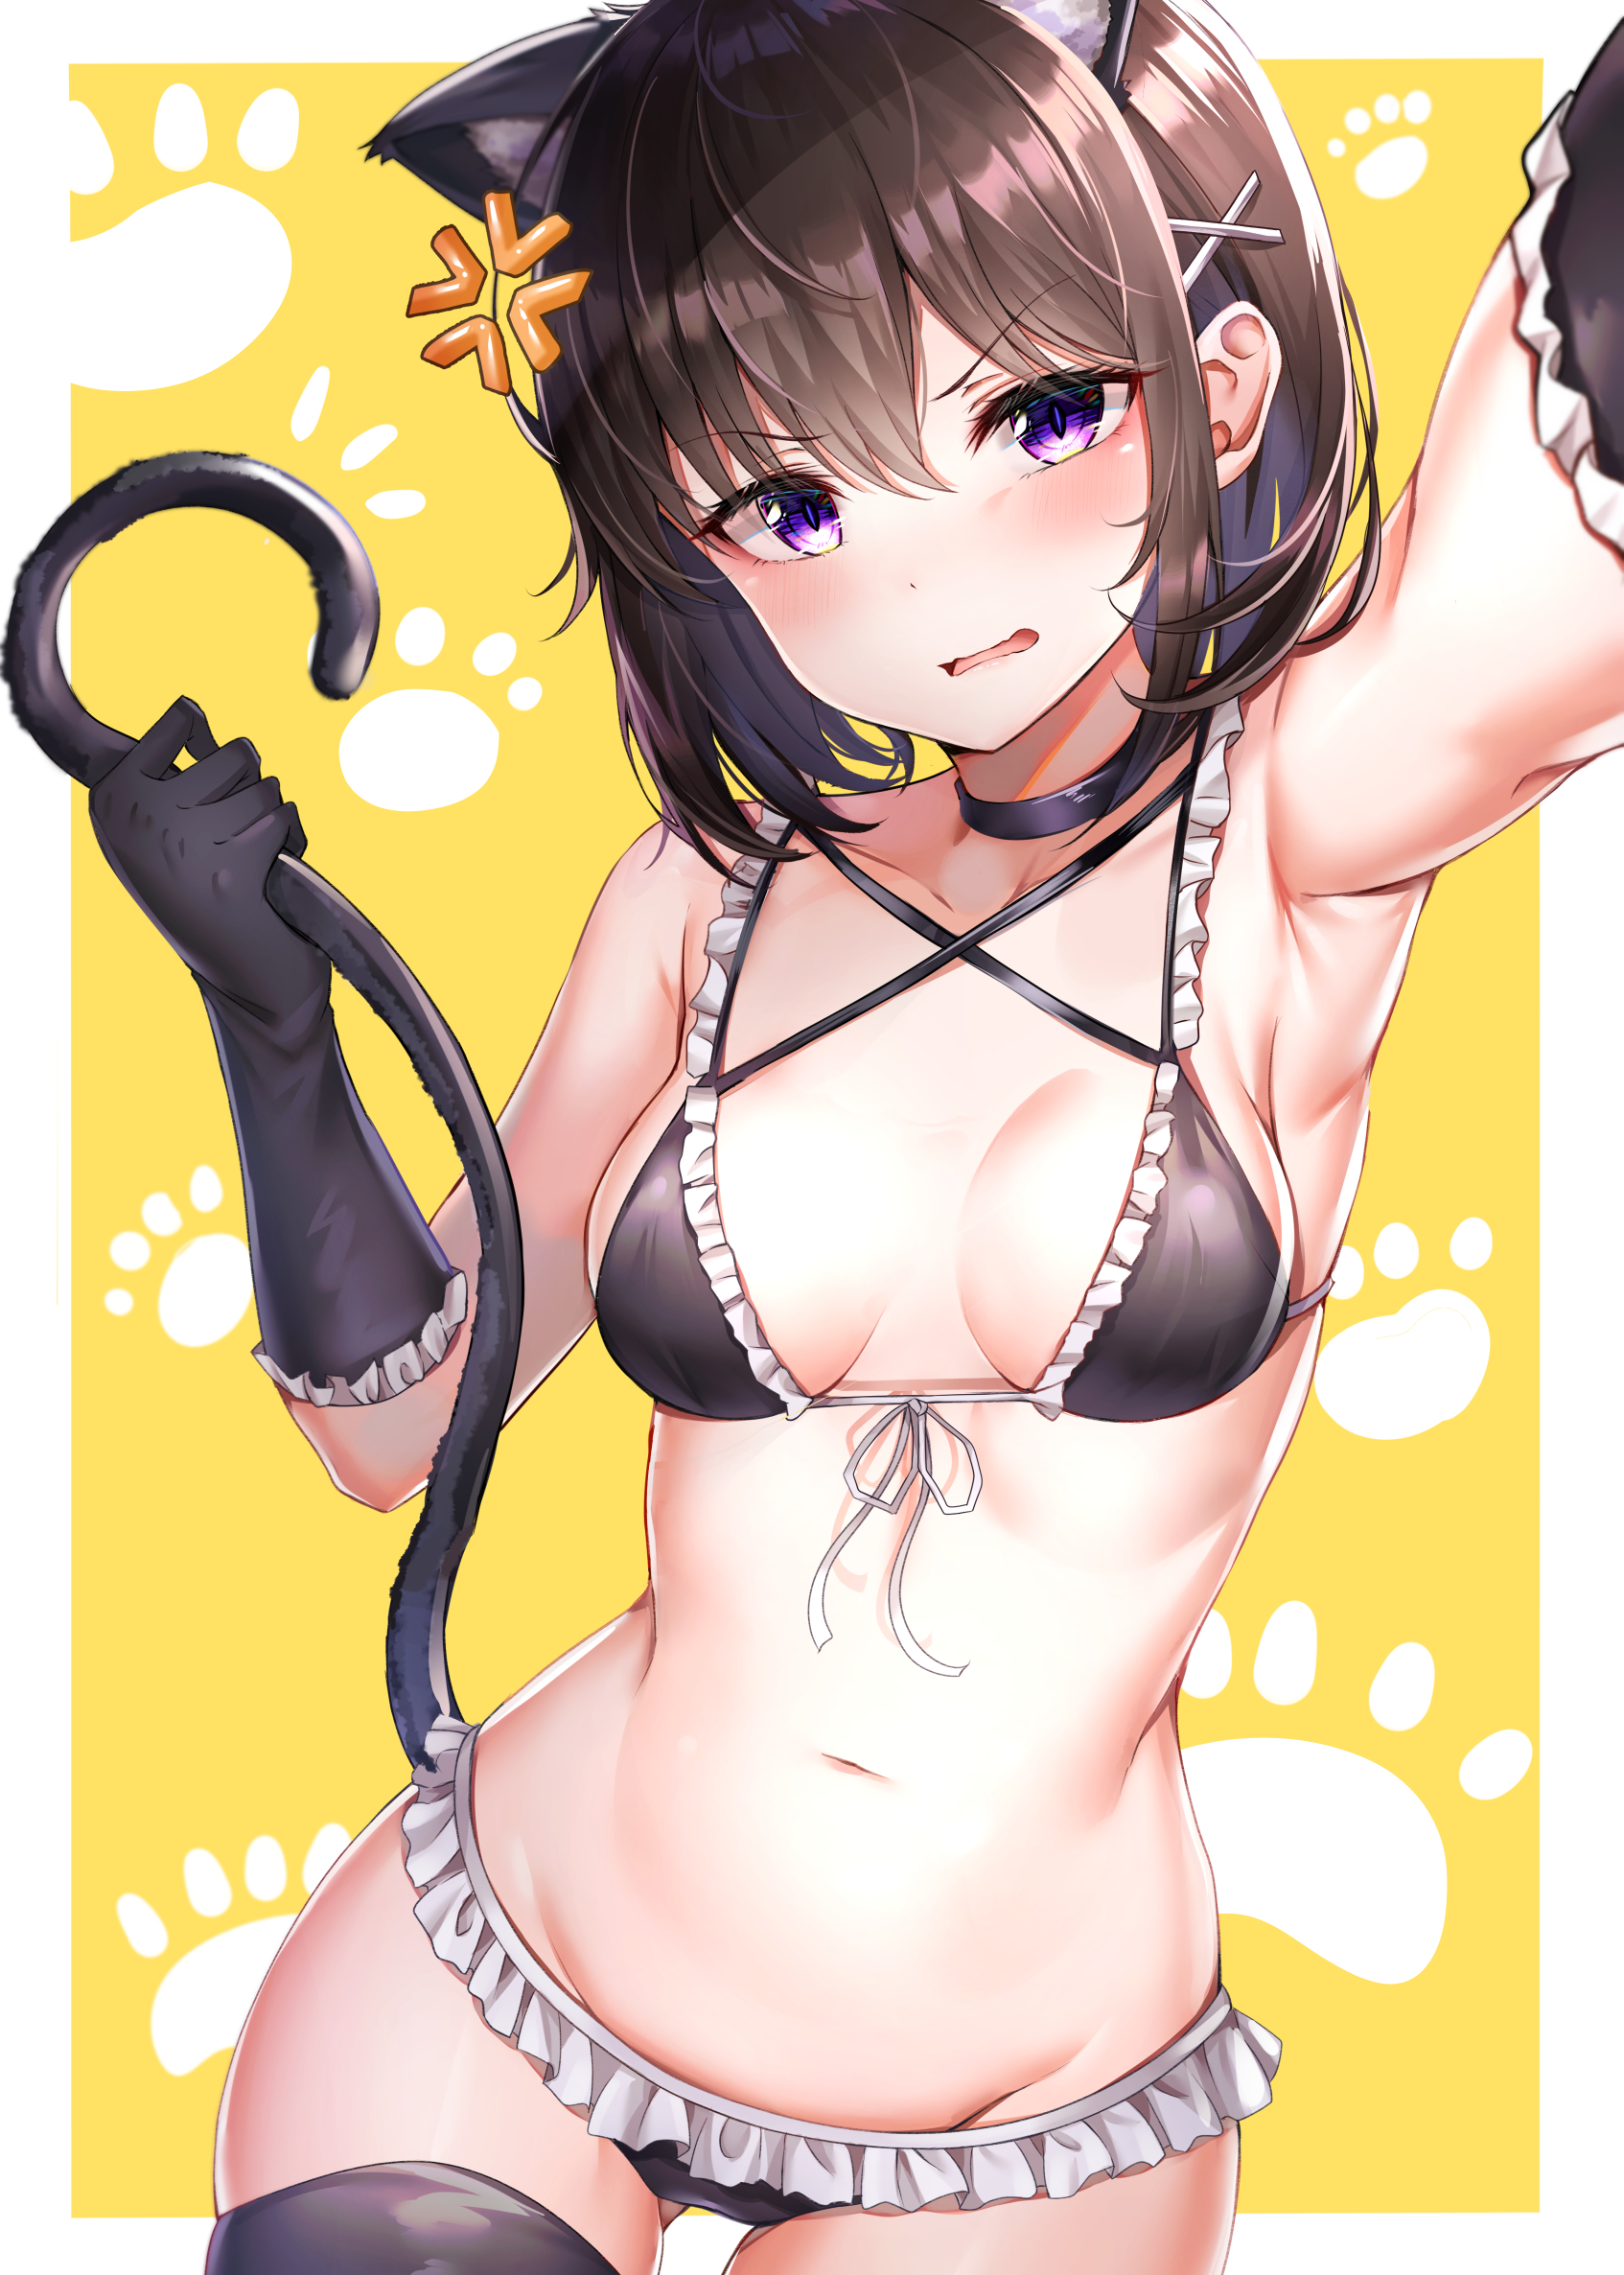 Anime 1694x2373 anime anime girls digital art artwork 2D portrait display maid bikini cat girl Sunhyun